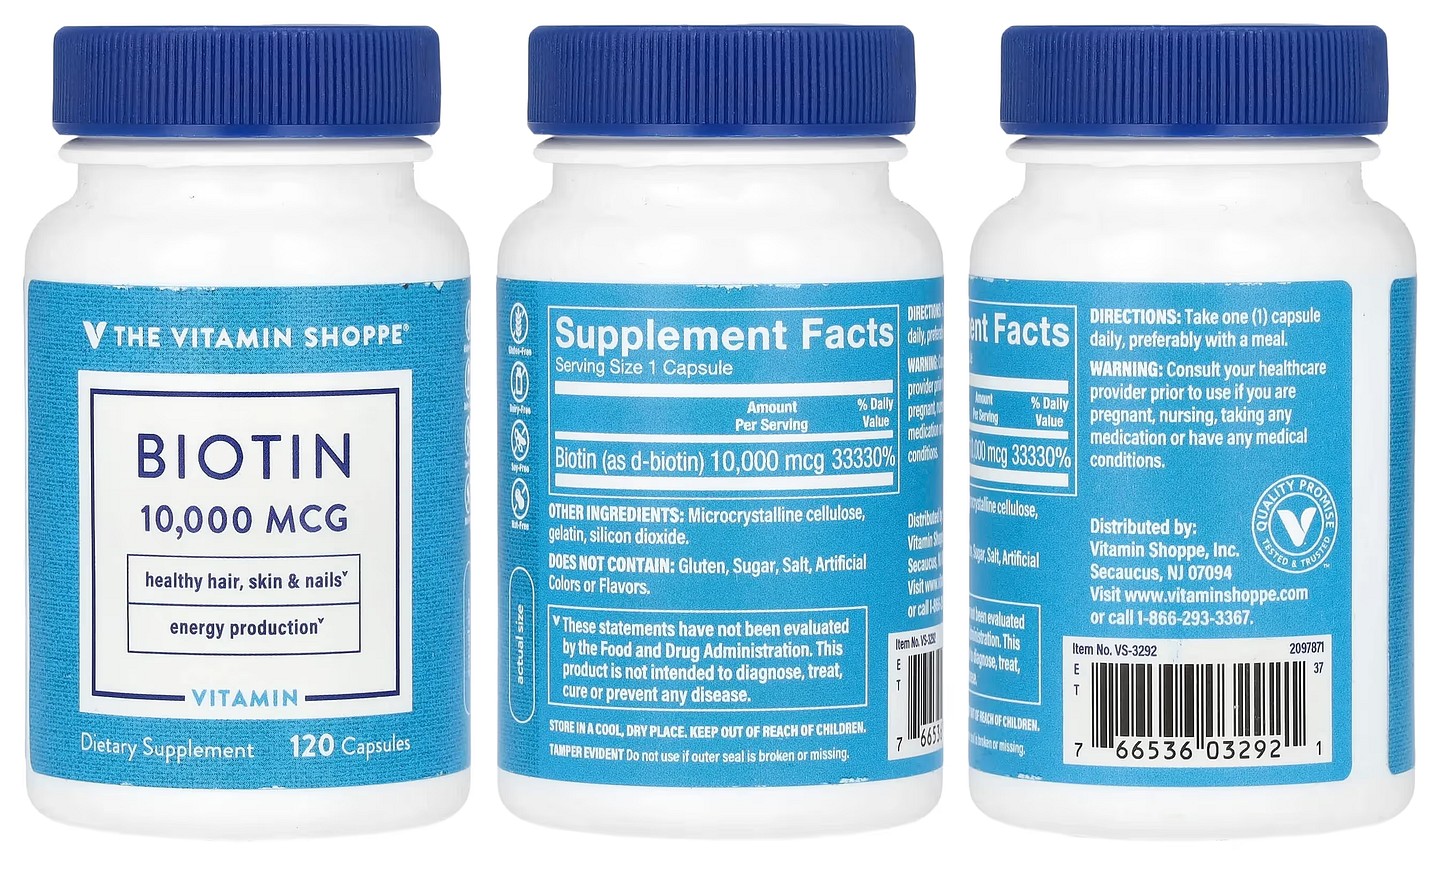 The Vitamin Shoppe, Biotin packaging